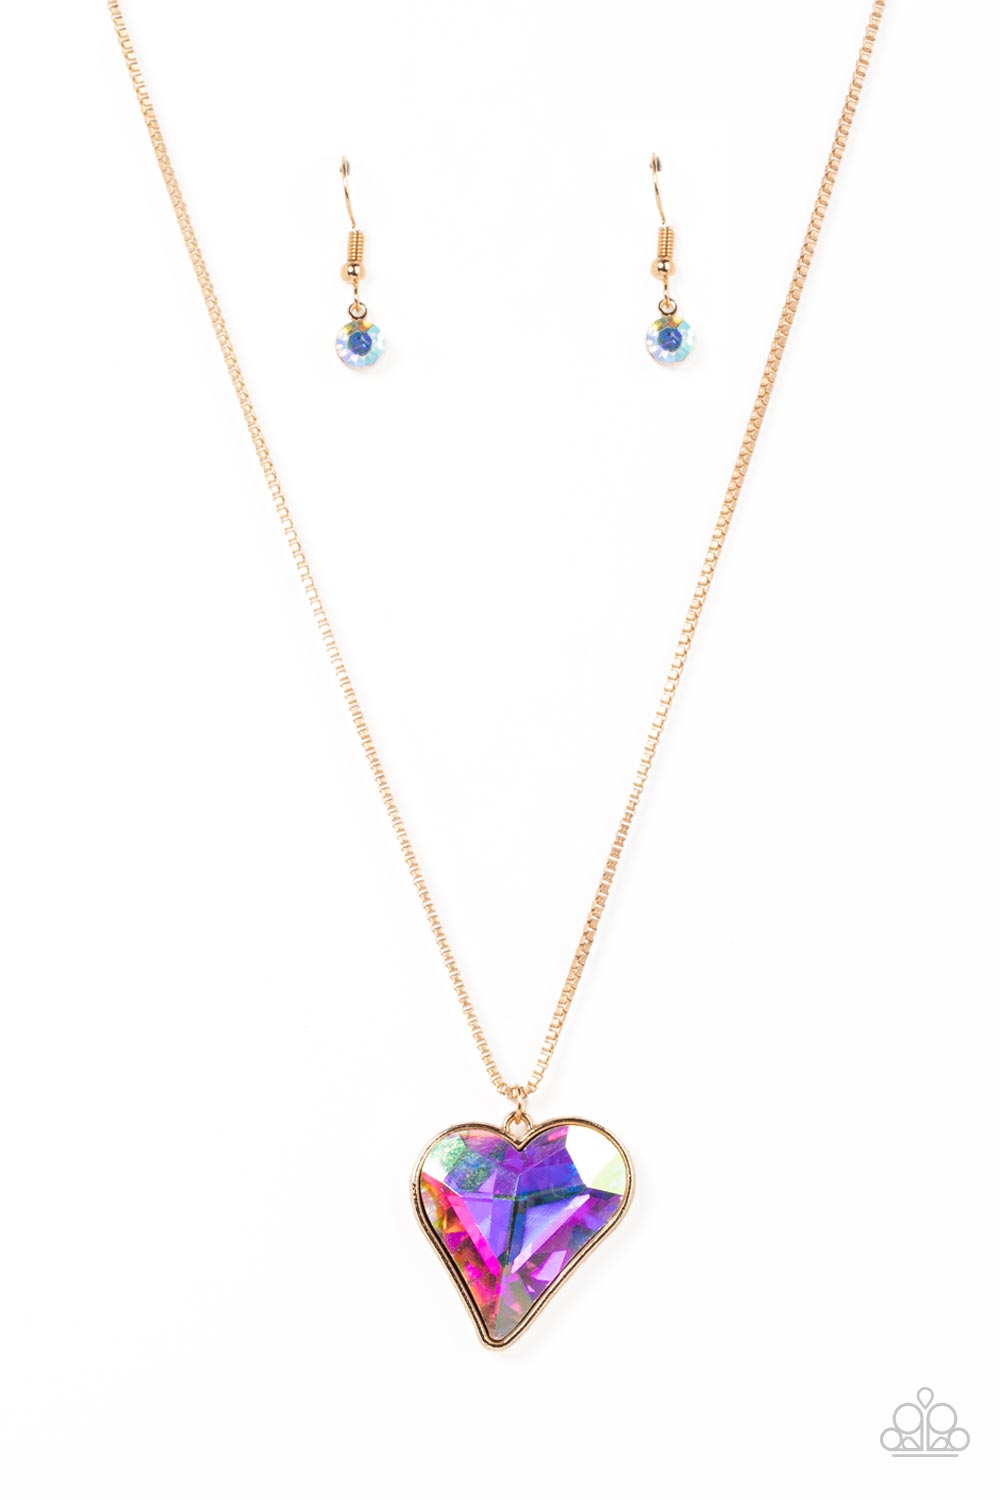 Lockdown My Heart - Gold Iridescent Necklace - Paparazzi Accessories - GlaMarous Titi Jewels